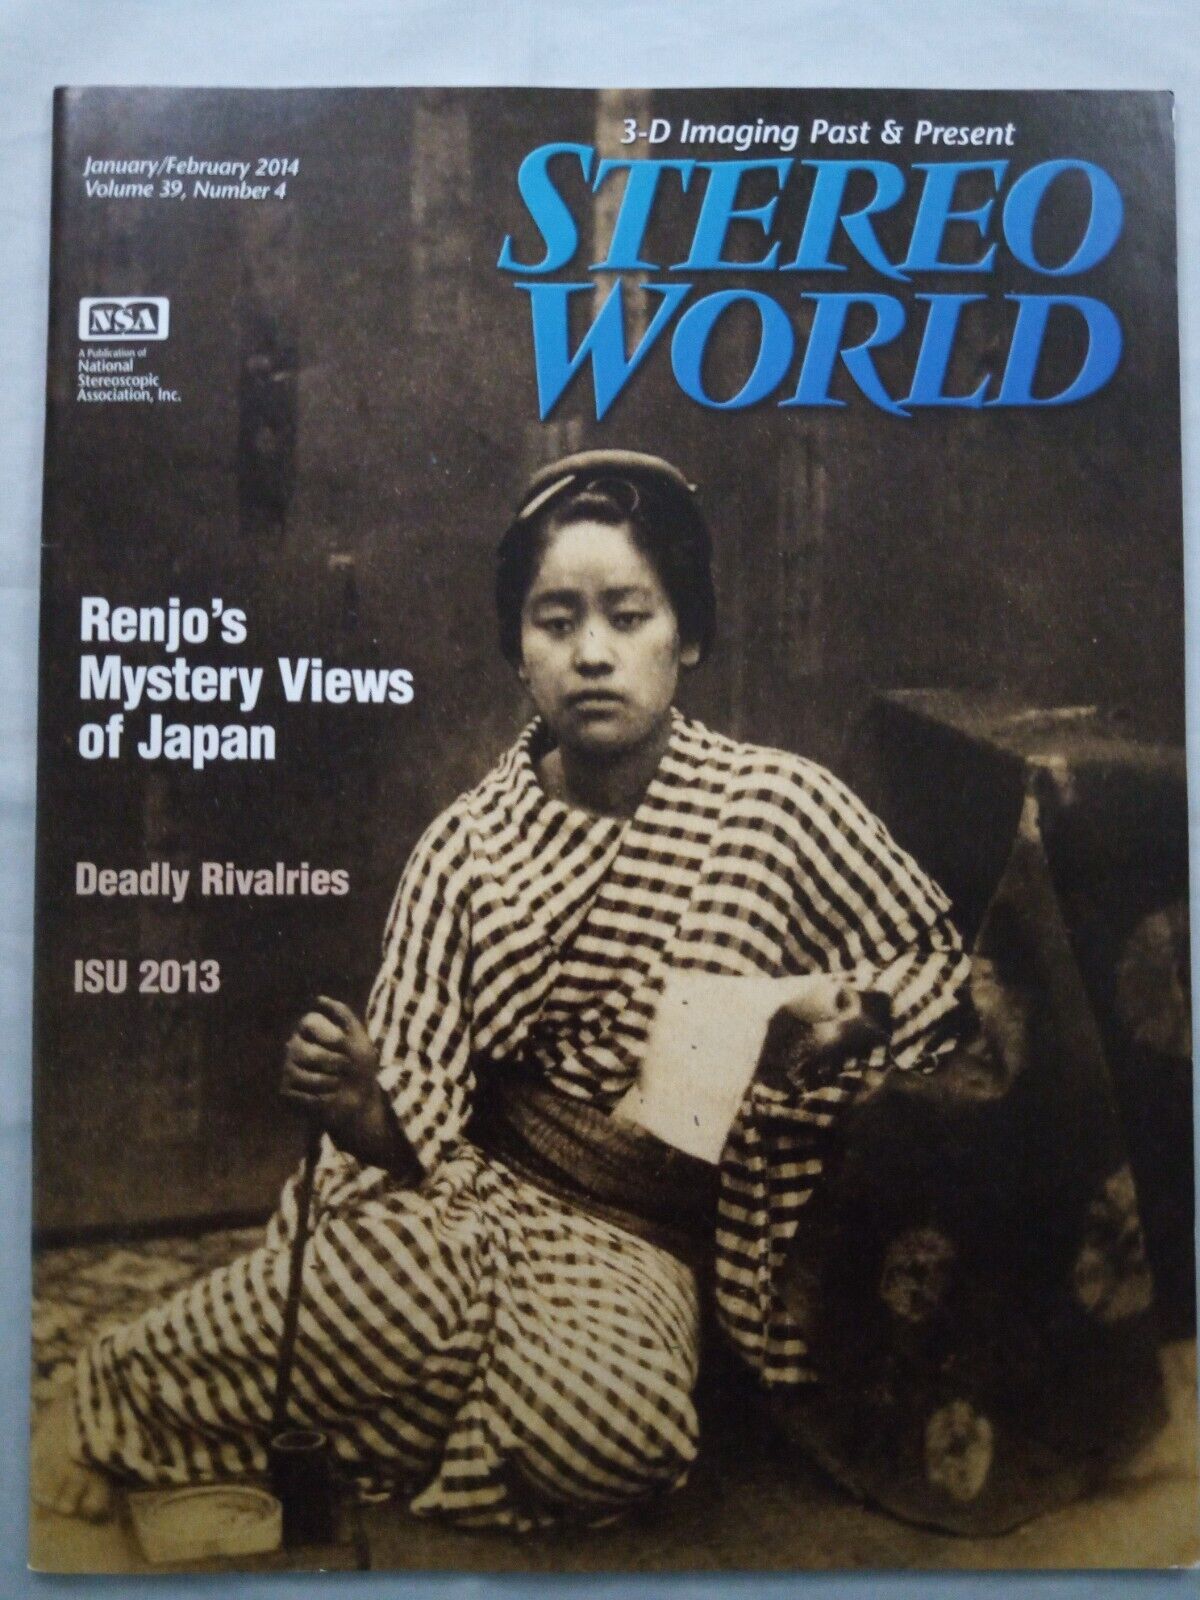 Stereo World Magazine - Jan/feb 2014 Vol 39 No 4 - Renjo's Japan Dead Rivalries